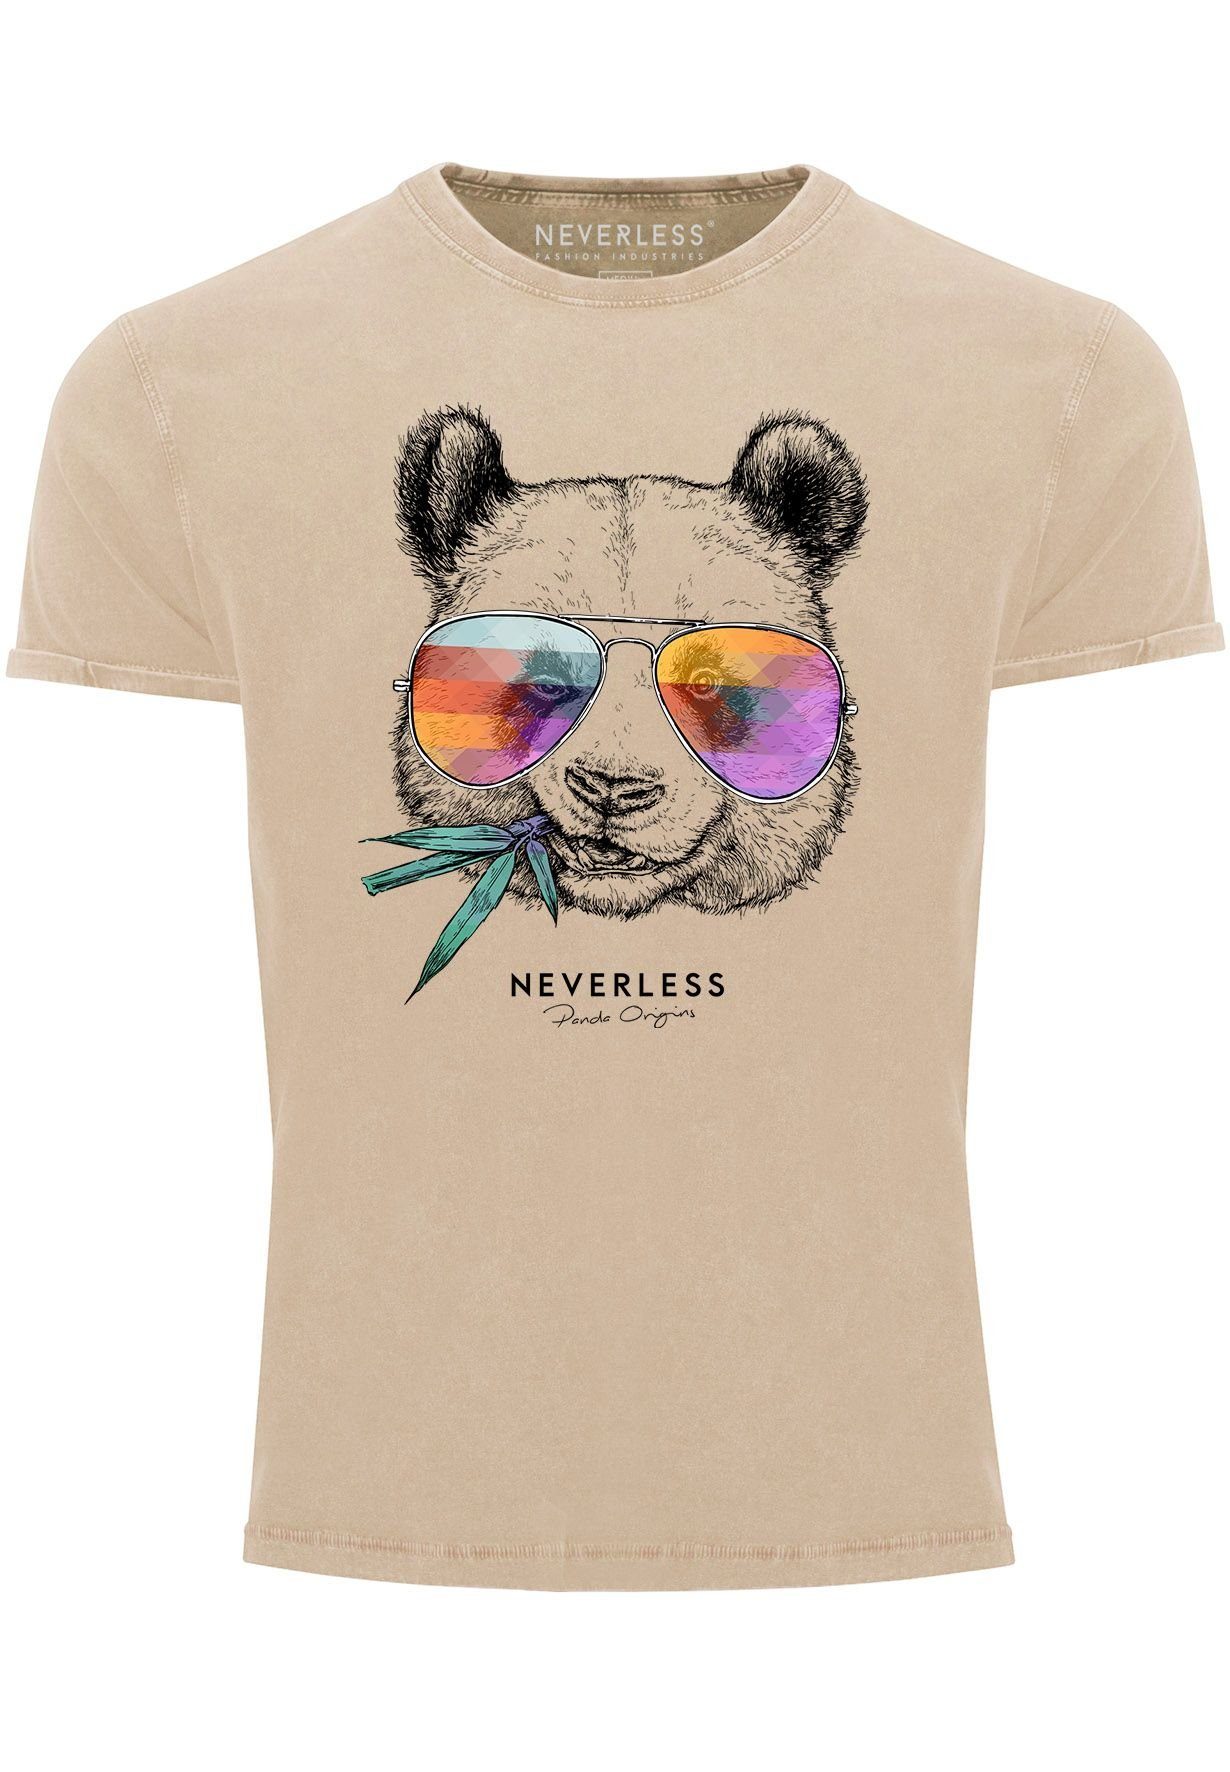 Neverless Print-Shirt Herren Vintage Shirt Panda Bär Aufdruck Tiermotiv Printshirt T-Shirt F mit Print